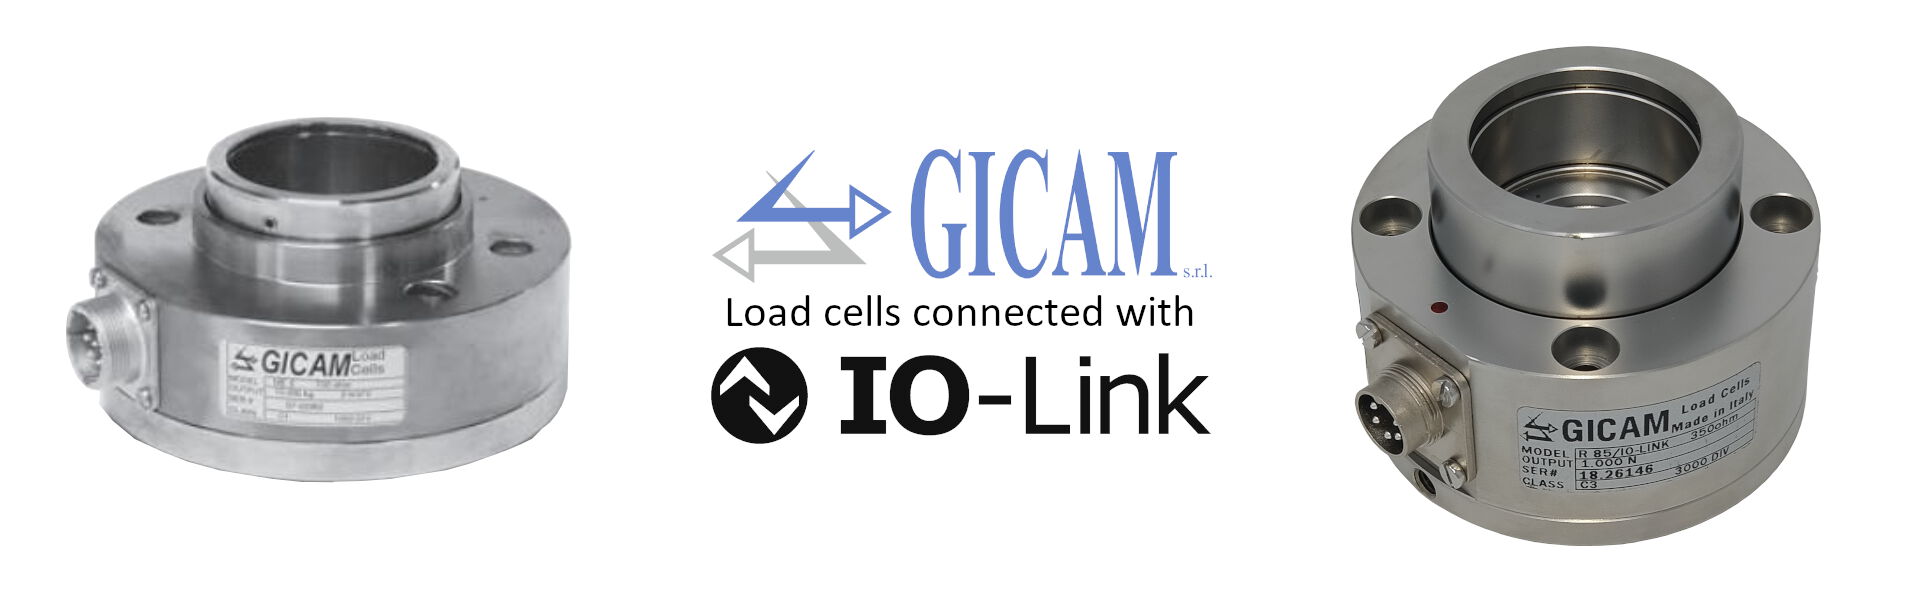 Nuove celle IO-Link Gicam